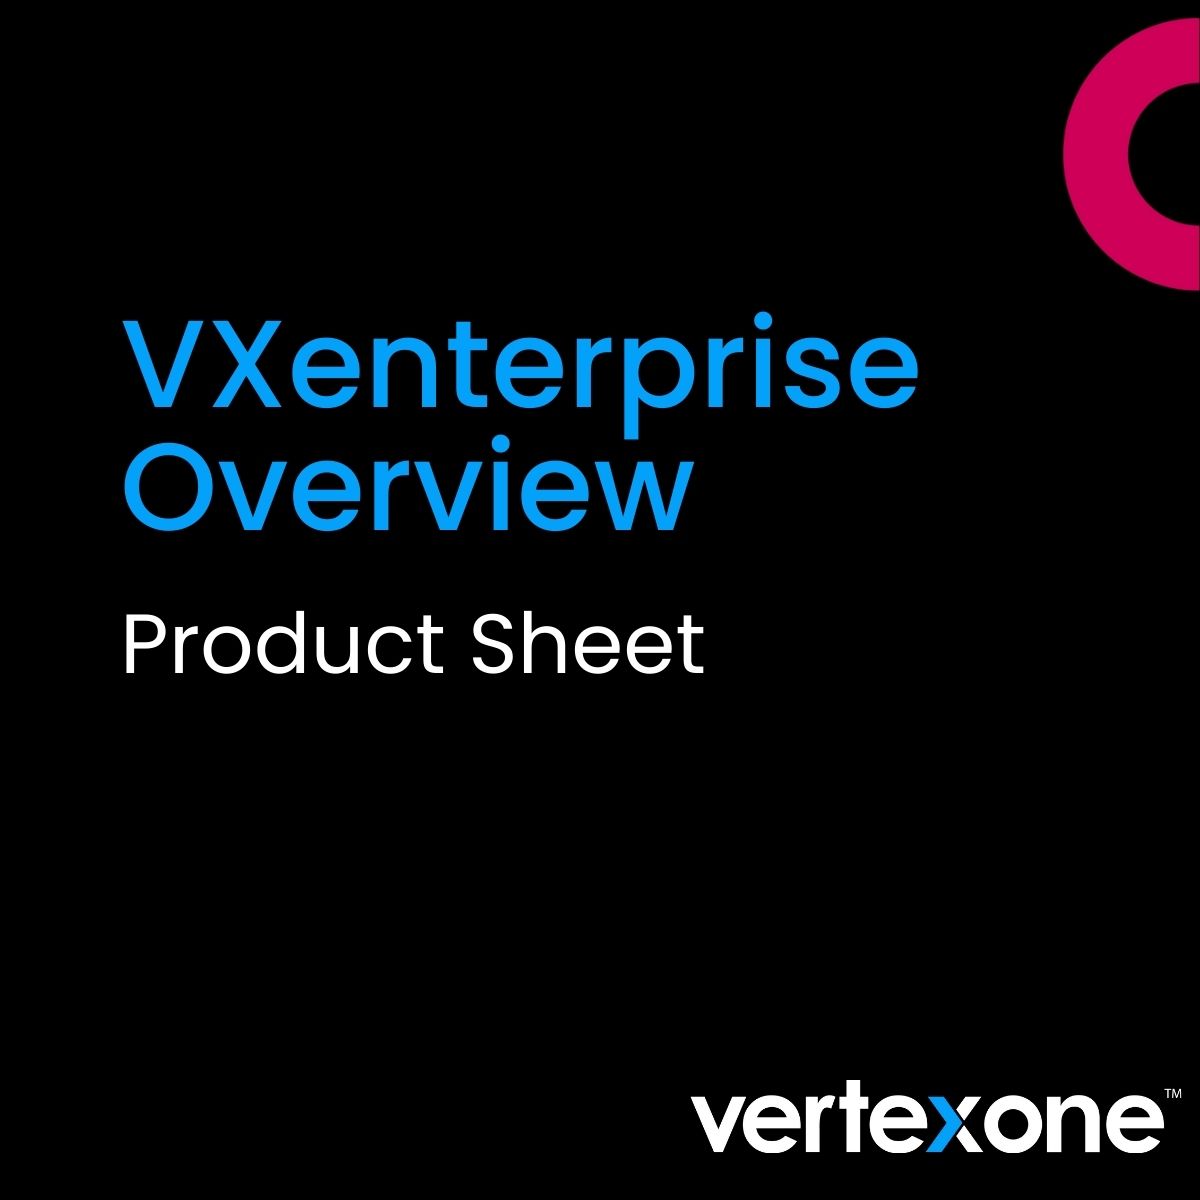 VXenterprise Overview Product Sheet